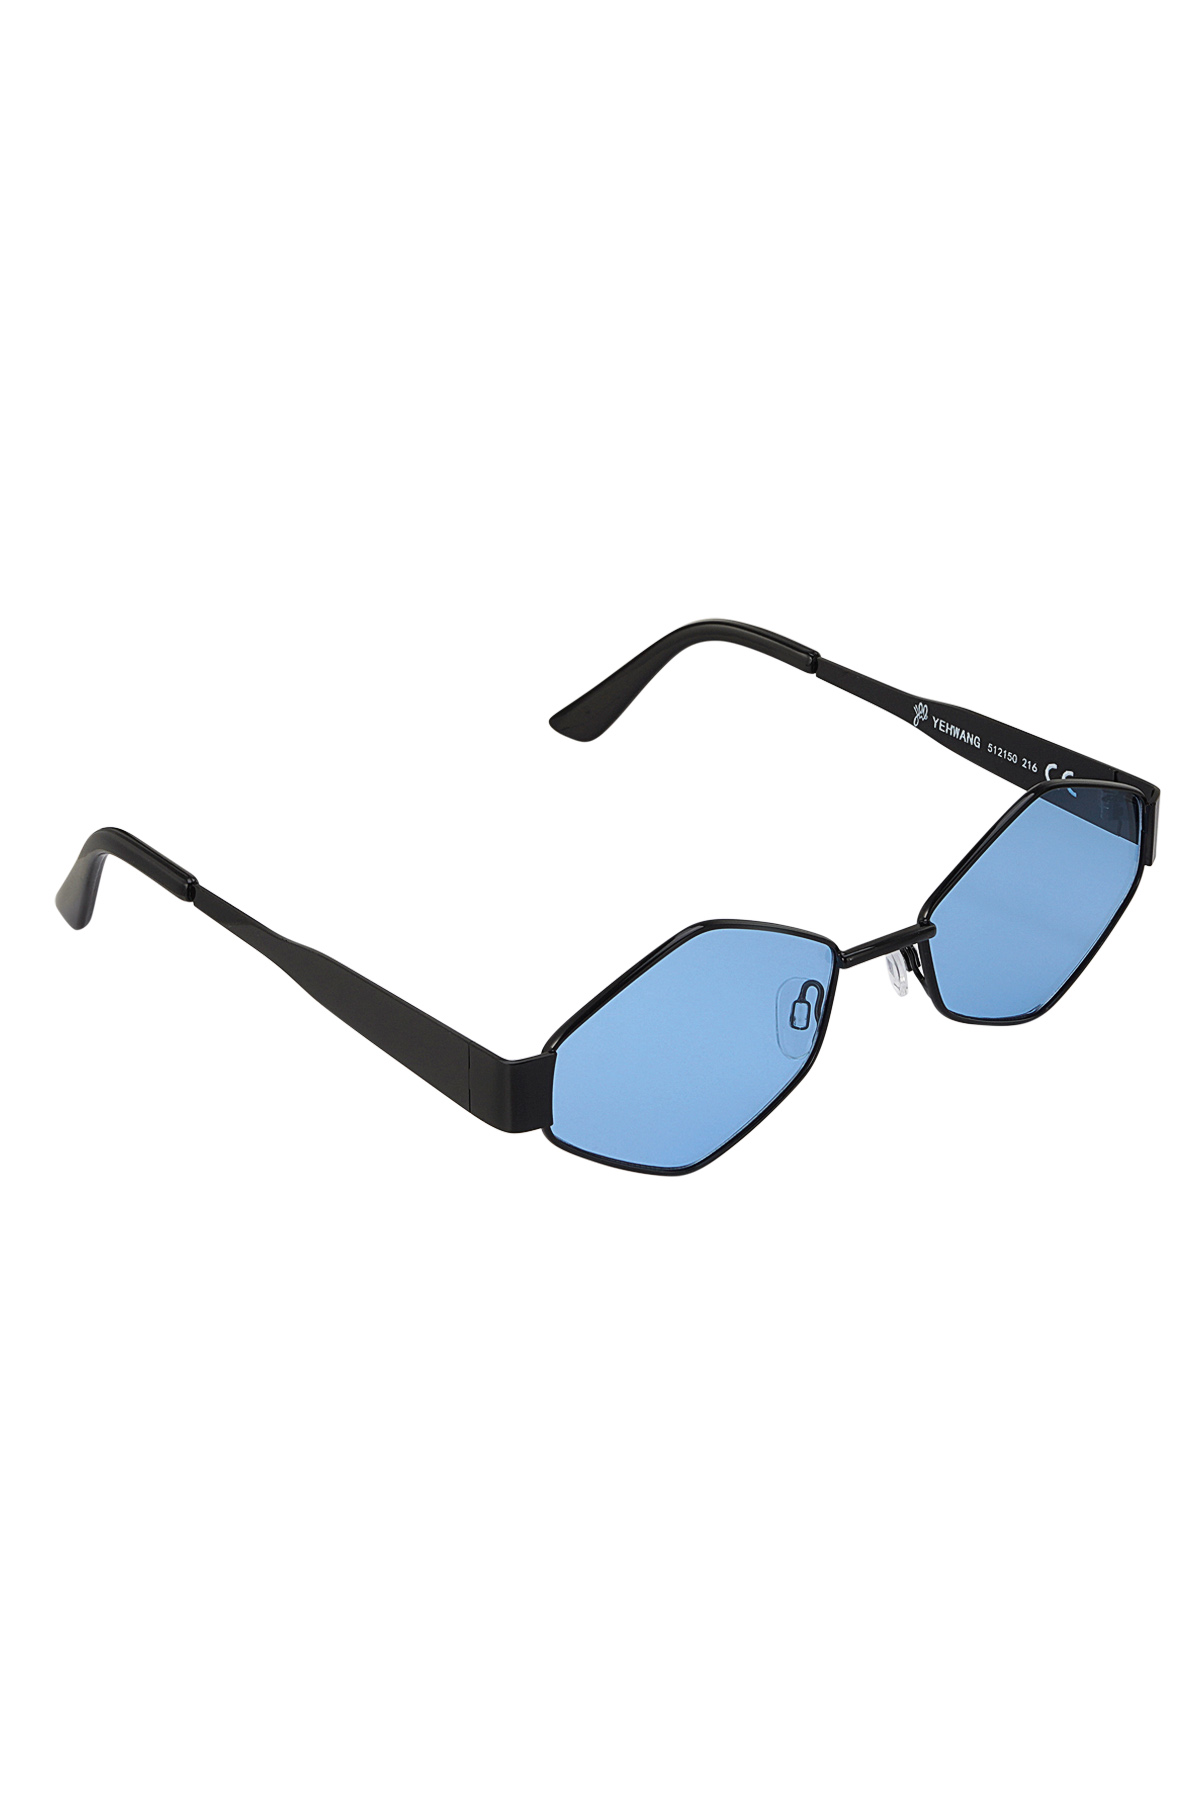 Sunglasses all night long - blue h5 